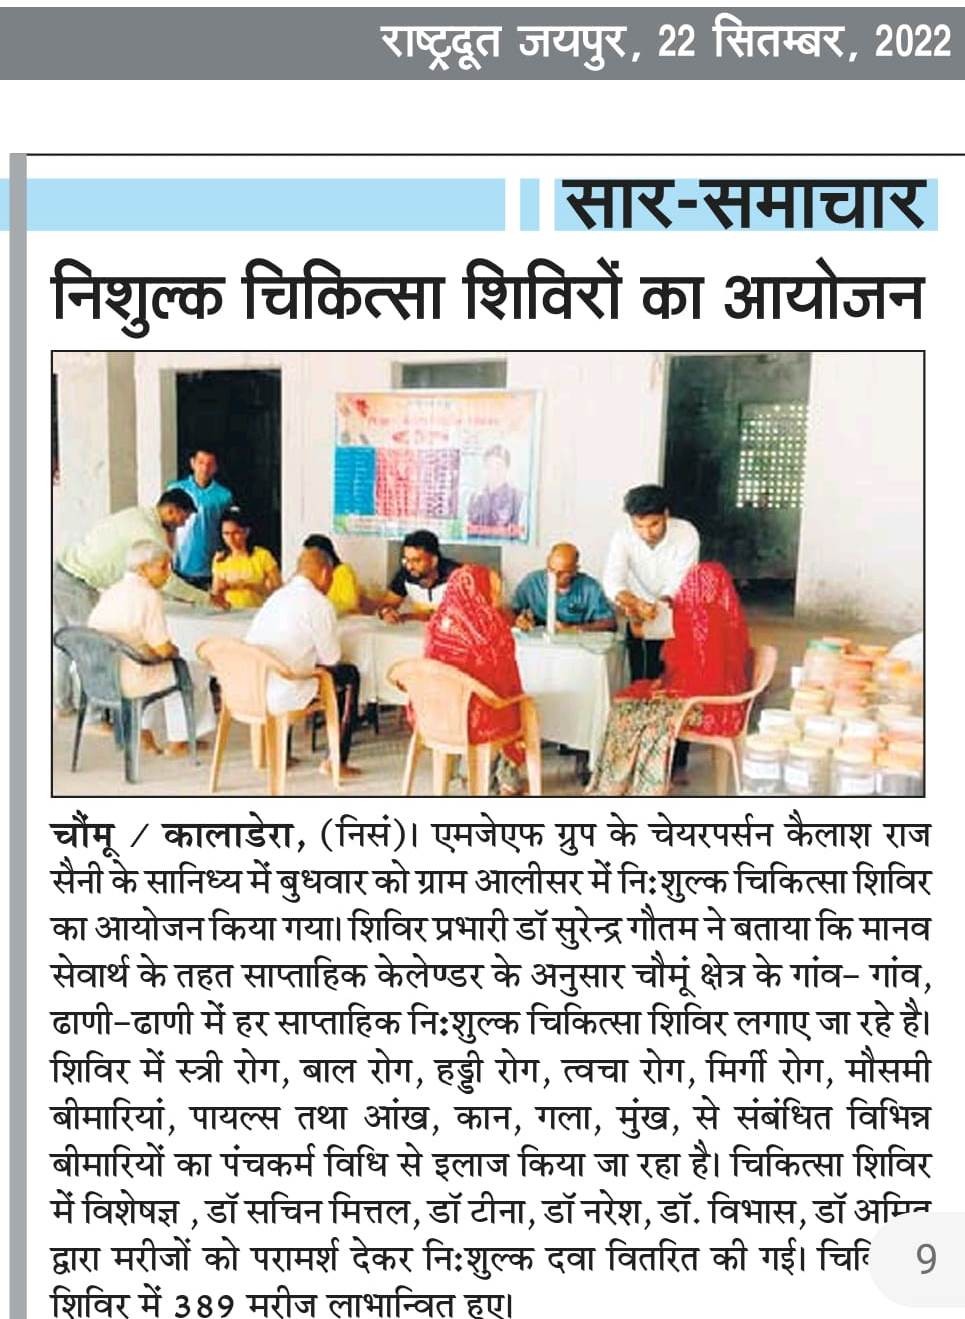 Weekly Free Medical Camp organized at Village Aalisar